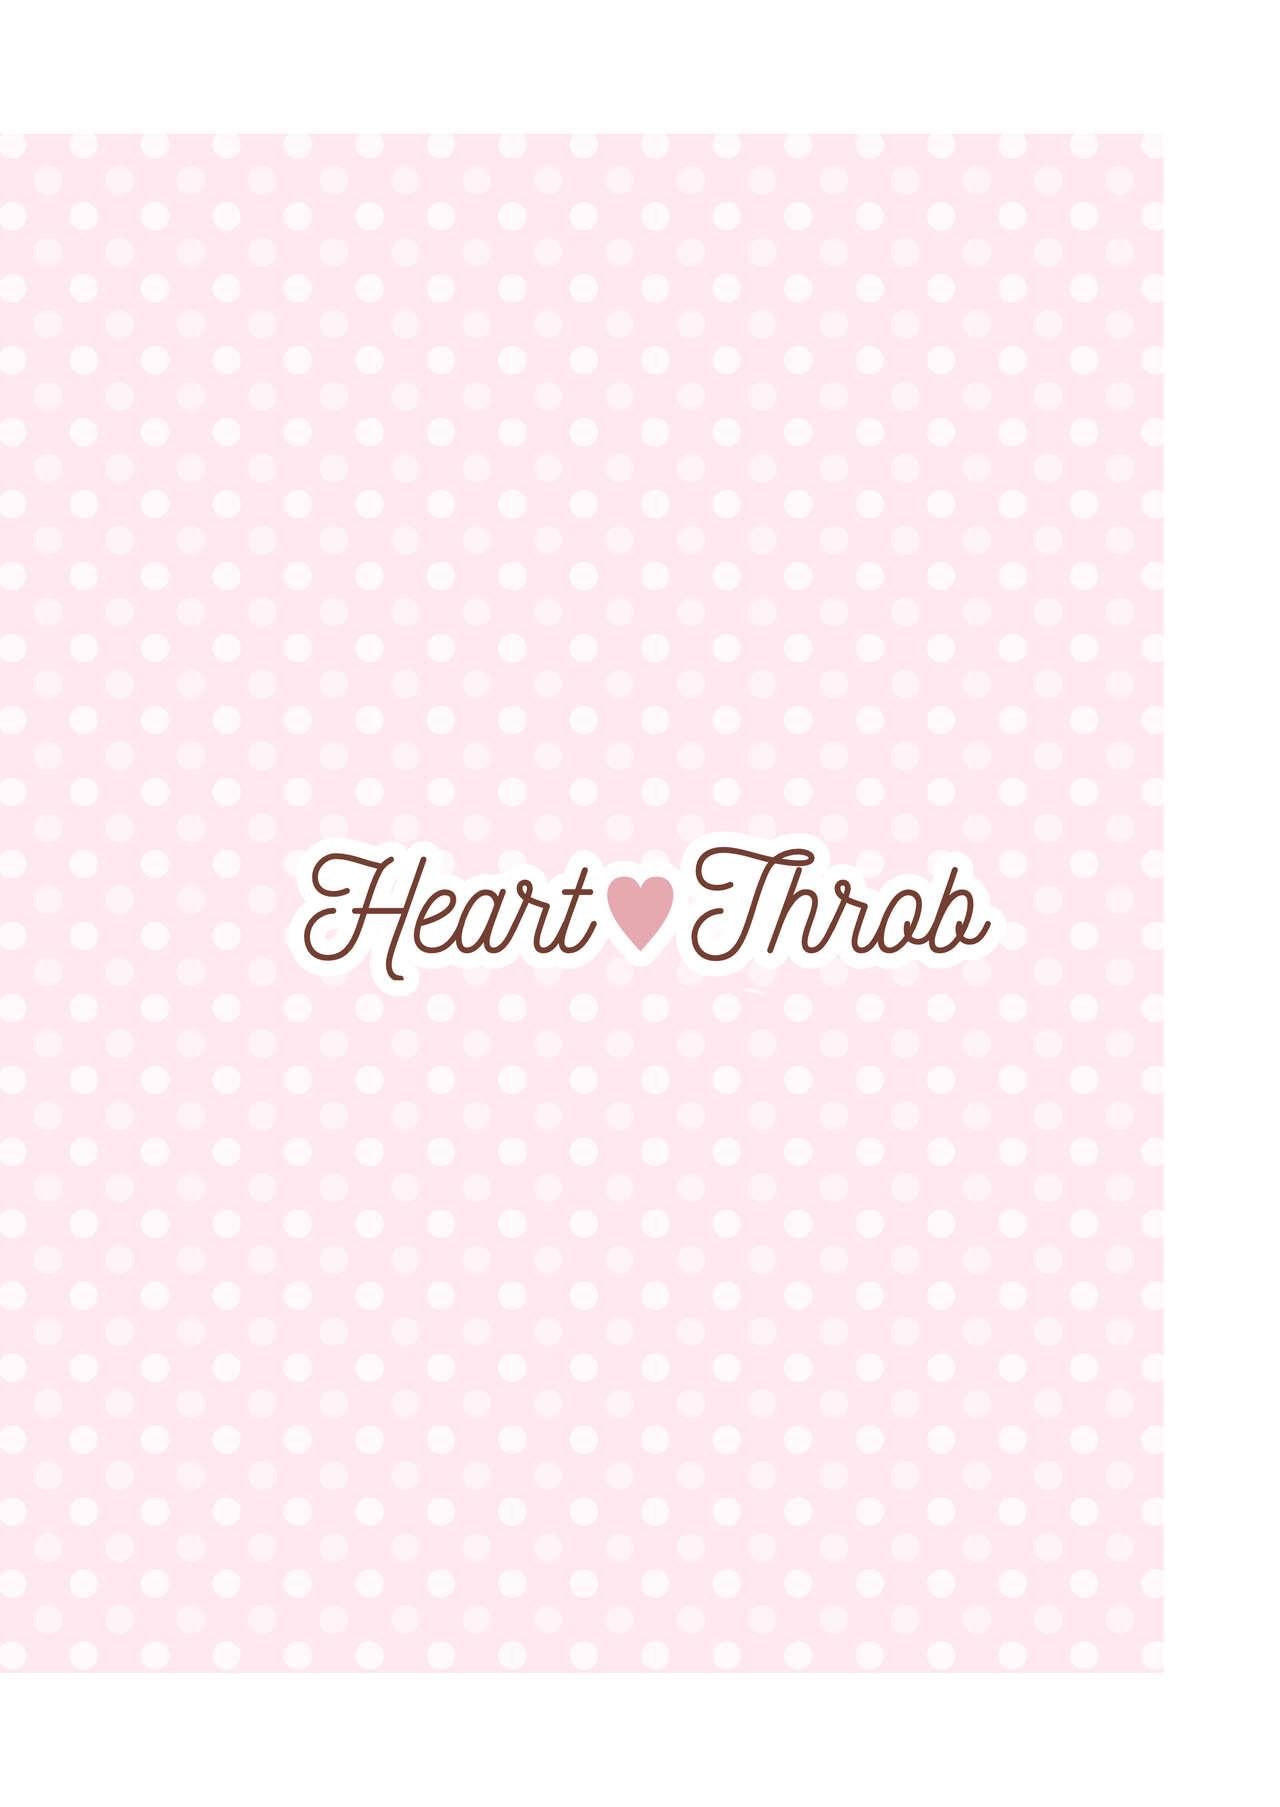 Heart Throb 2 19